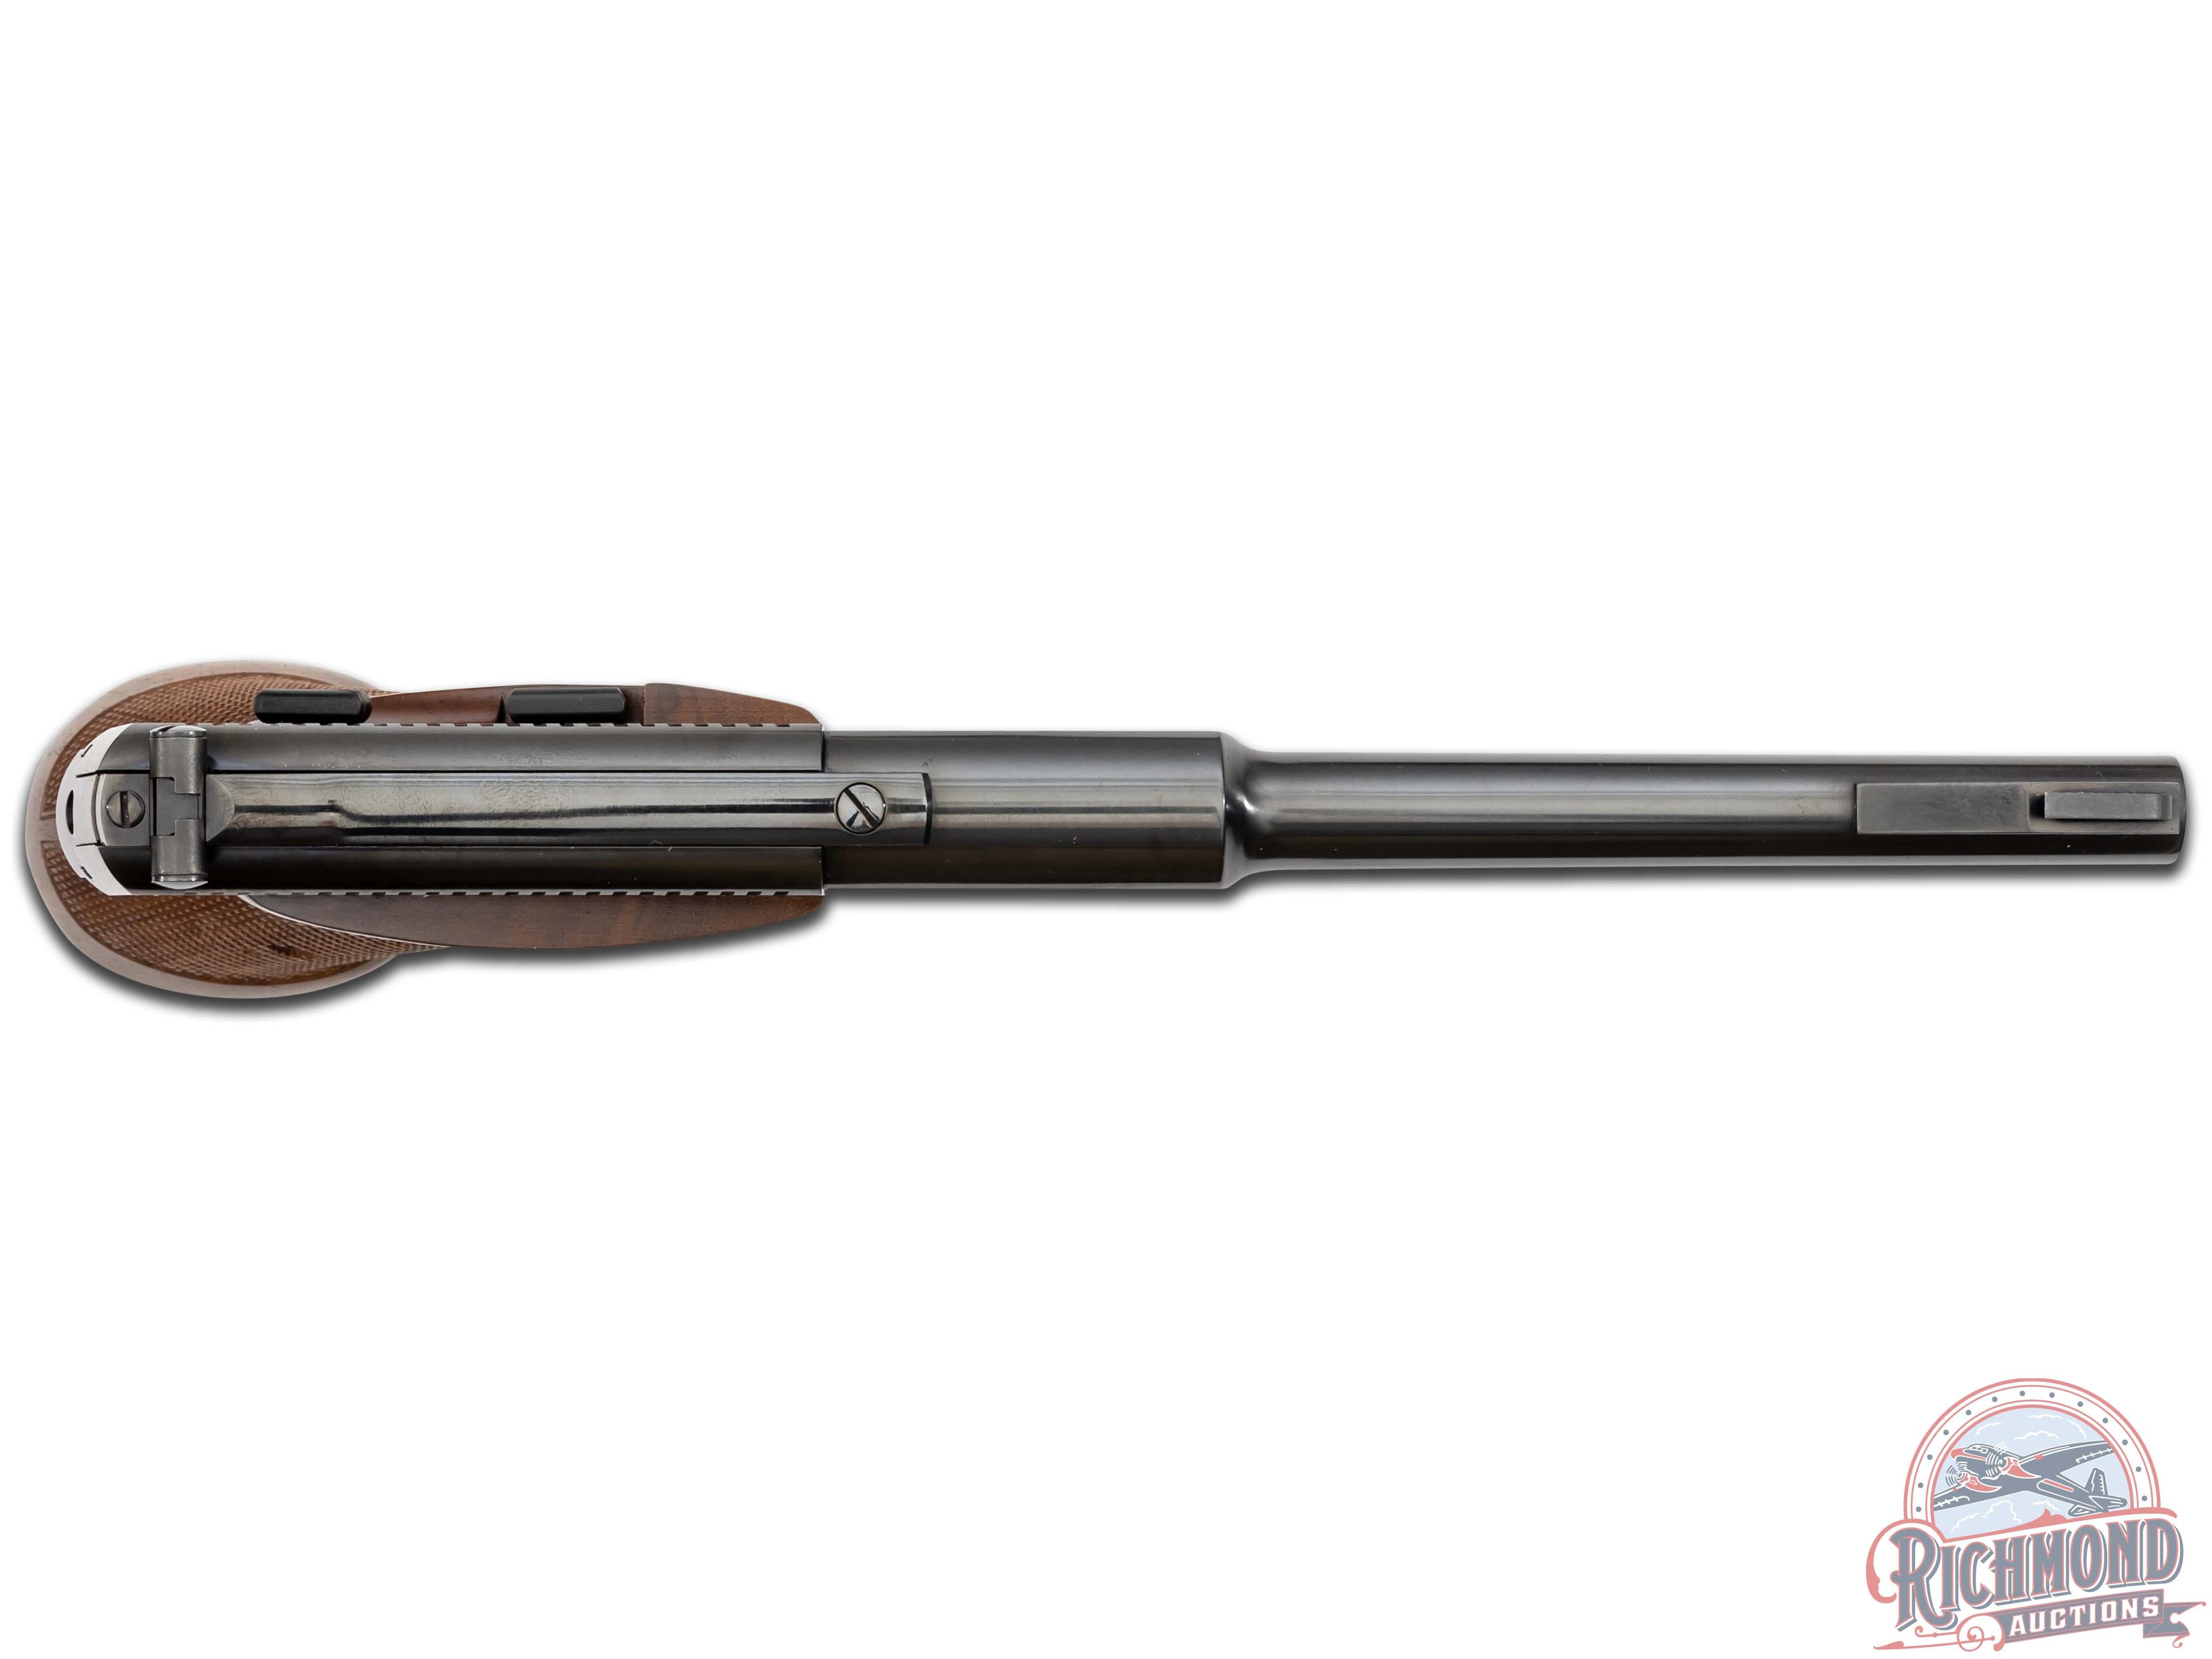 Stunning 1968 Browning Belgian Challenger Target .22 LR Semi-Automatic Pistol